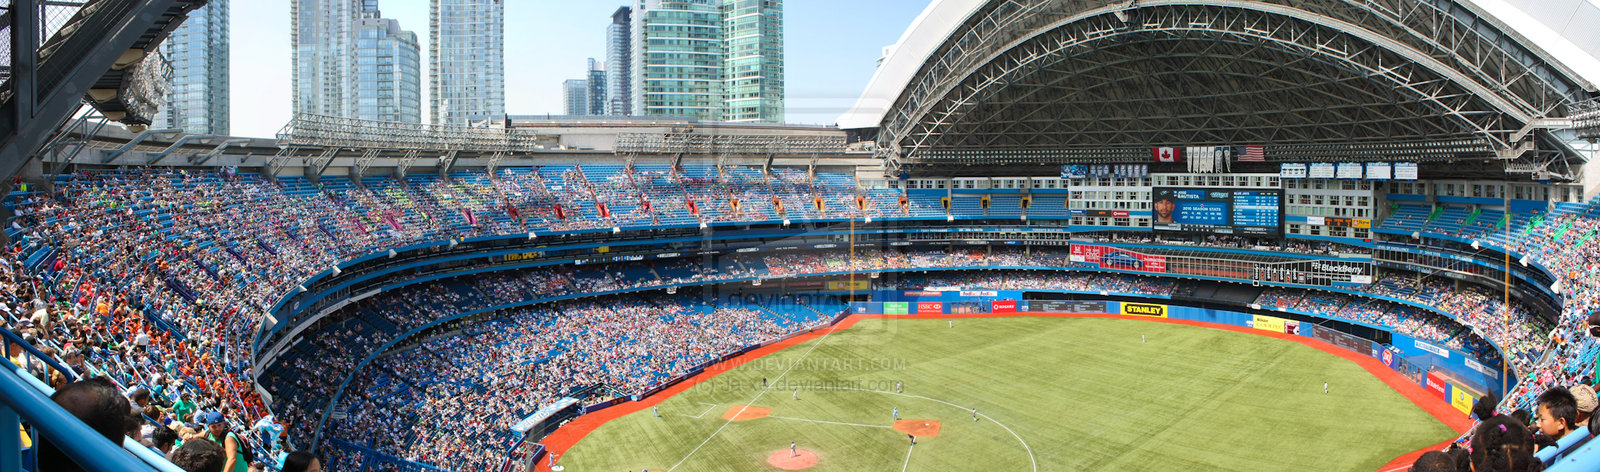 Rogers Center Stadium Toronto By Ja Xe